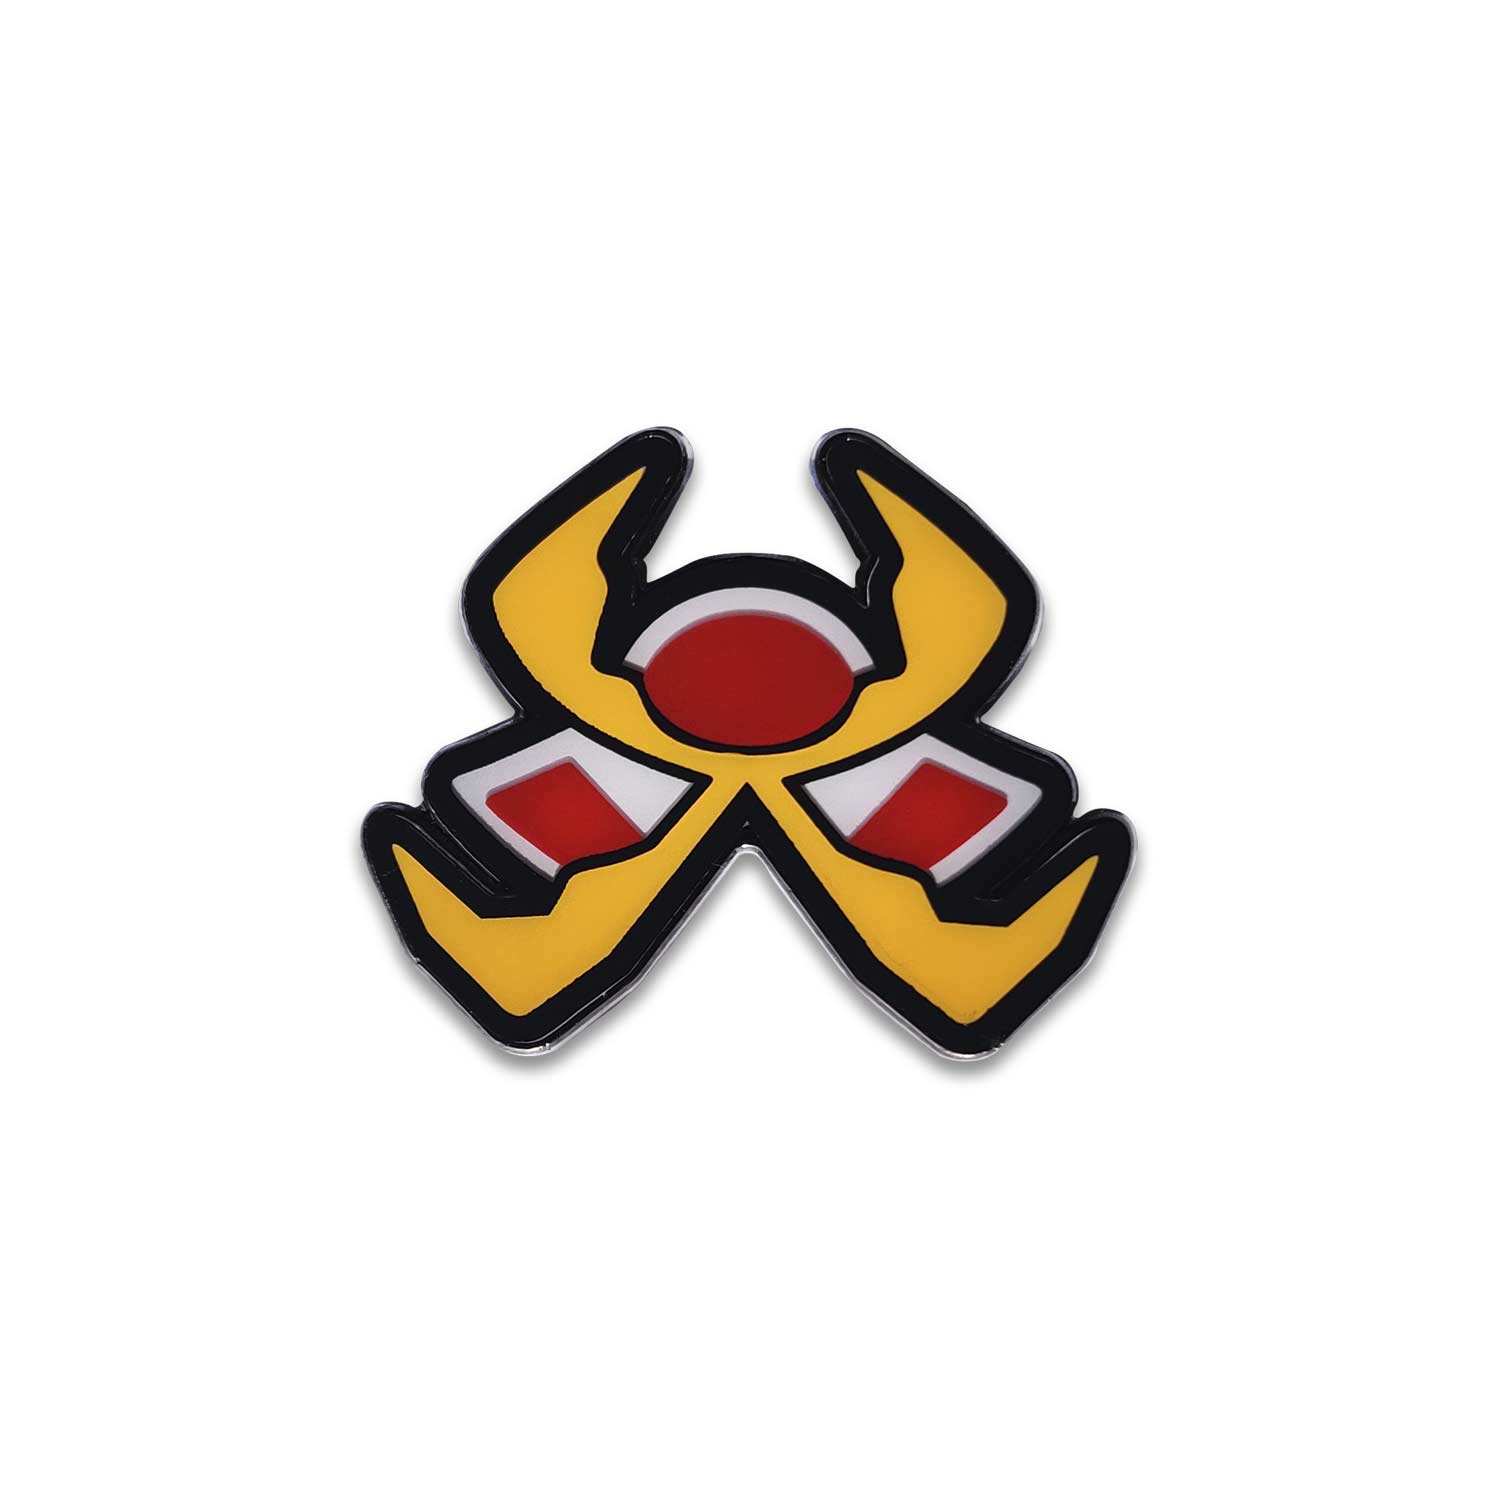 El Pokémon Sword & shield 3.5 Champions Path pin Collection Gym Edition v2